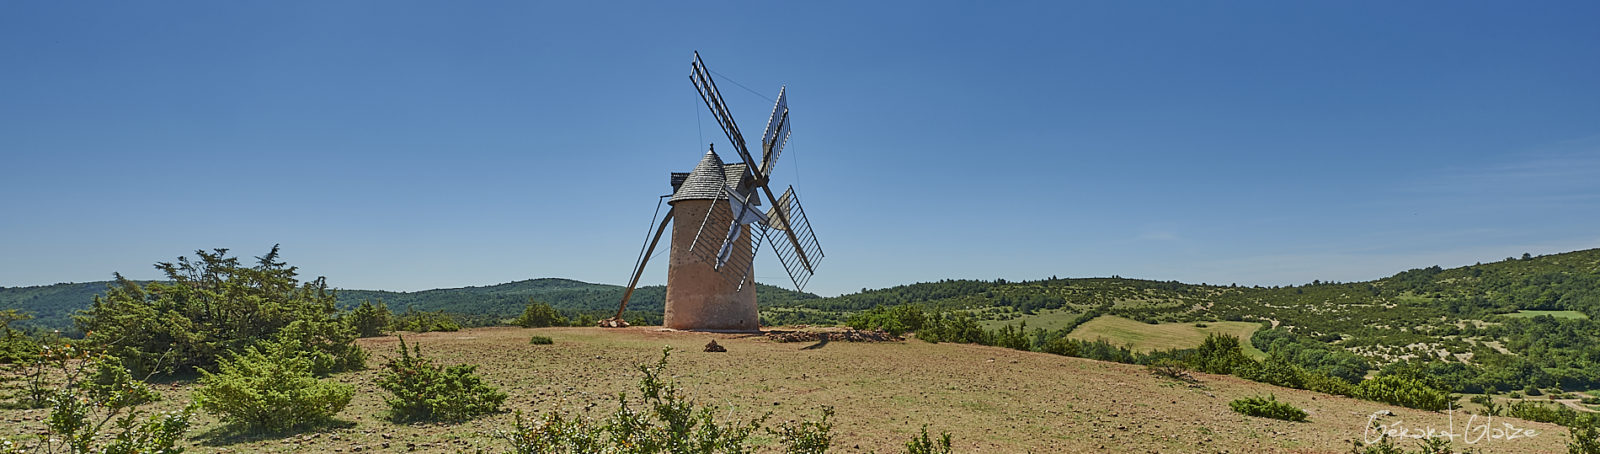 Moulin de Redounel - Grands Causses